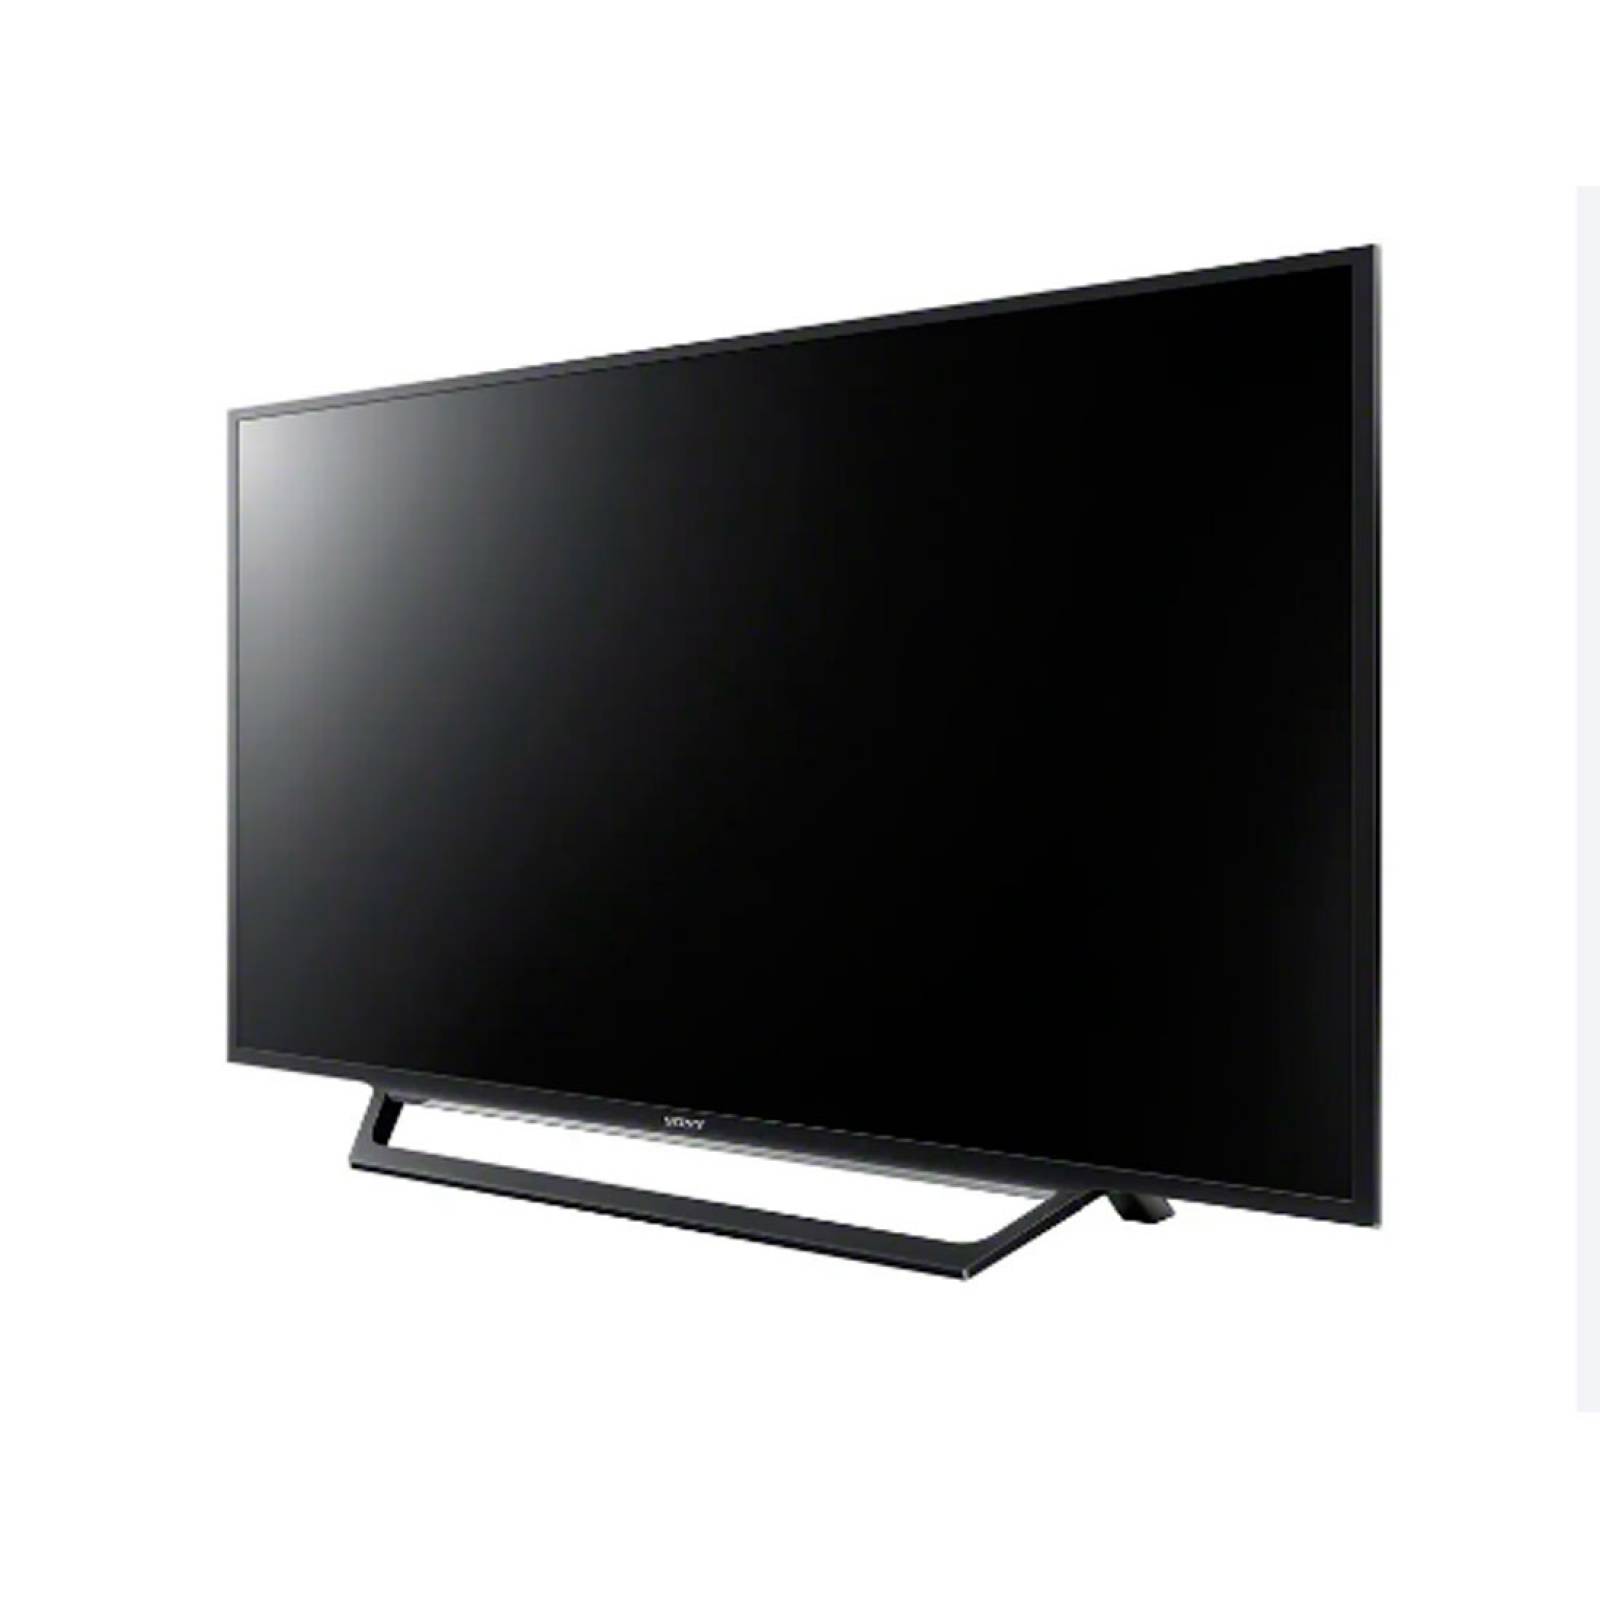 Smart TV 40 Pulg LED FHD HDMI 240Hz Negro KDL-40W650D Sony